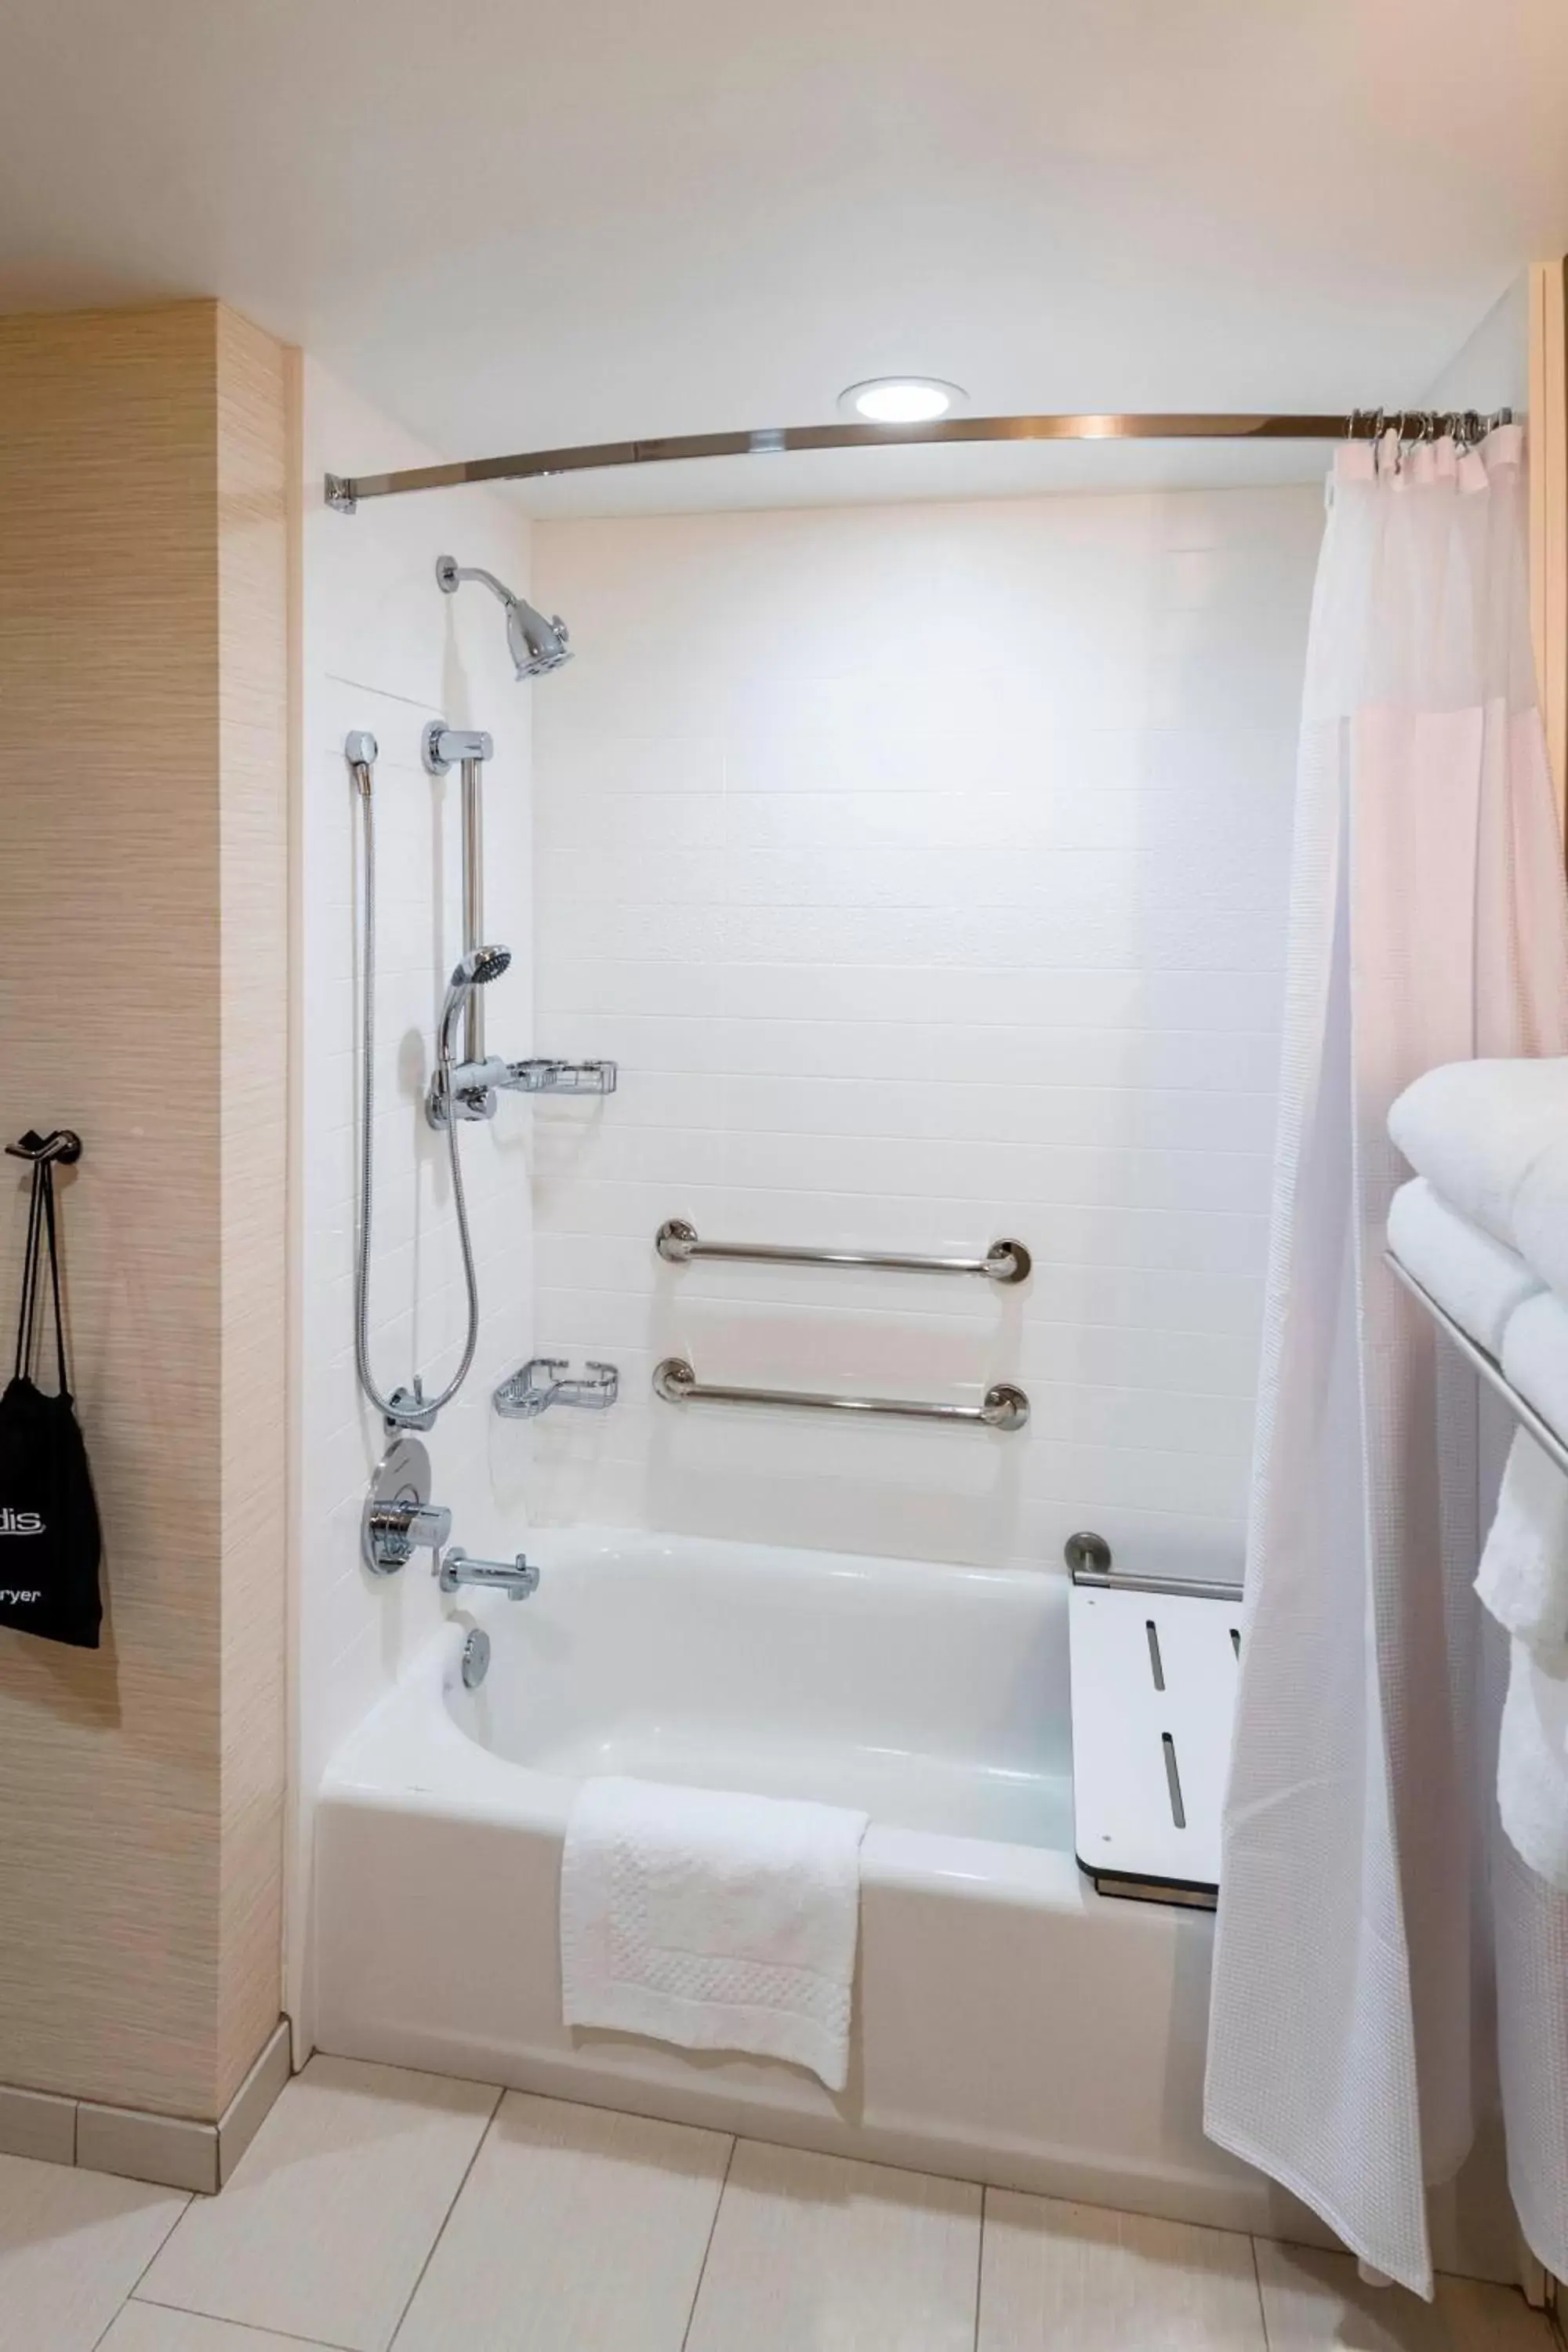 Bathroom in Fairfield Inn & Suites by Marriott Dallas Waxahachie